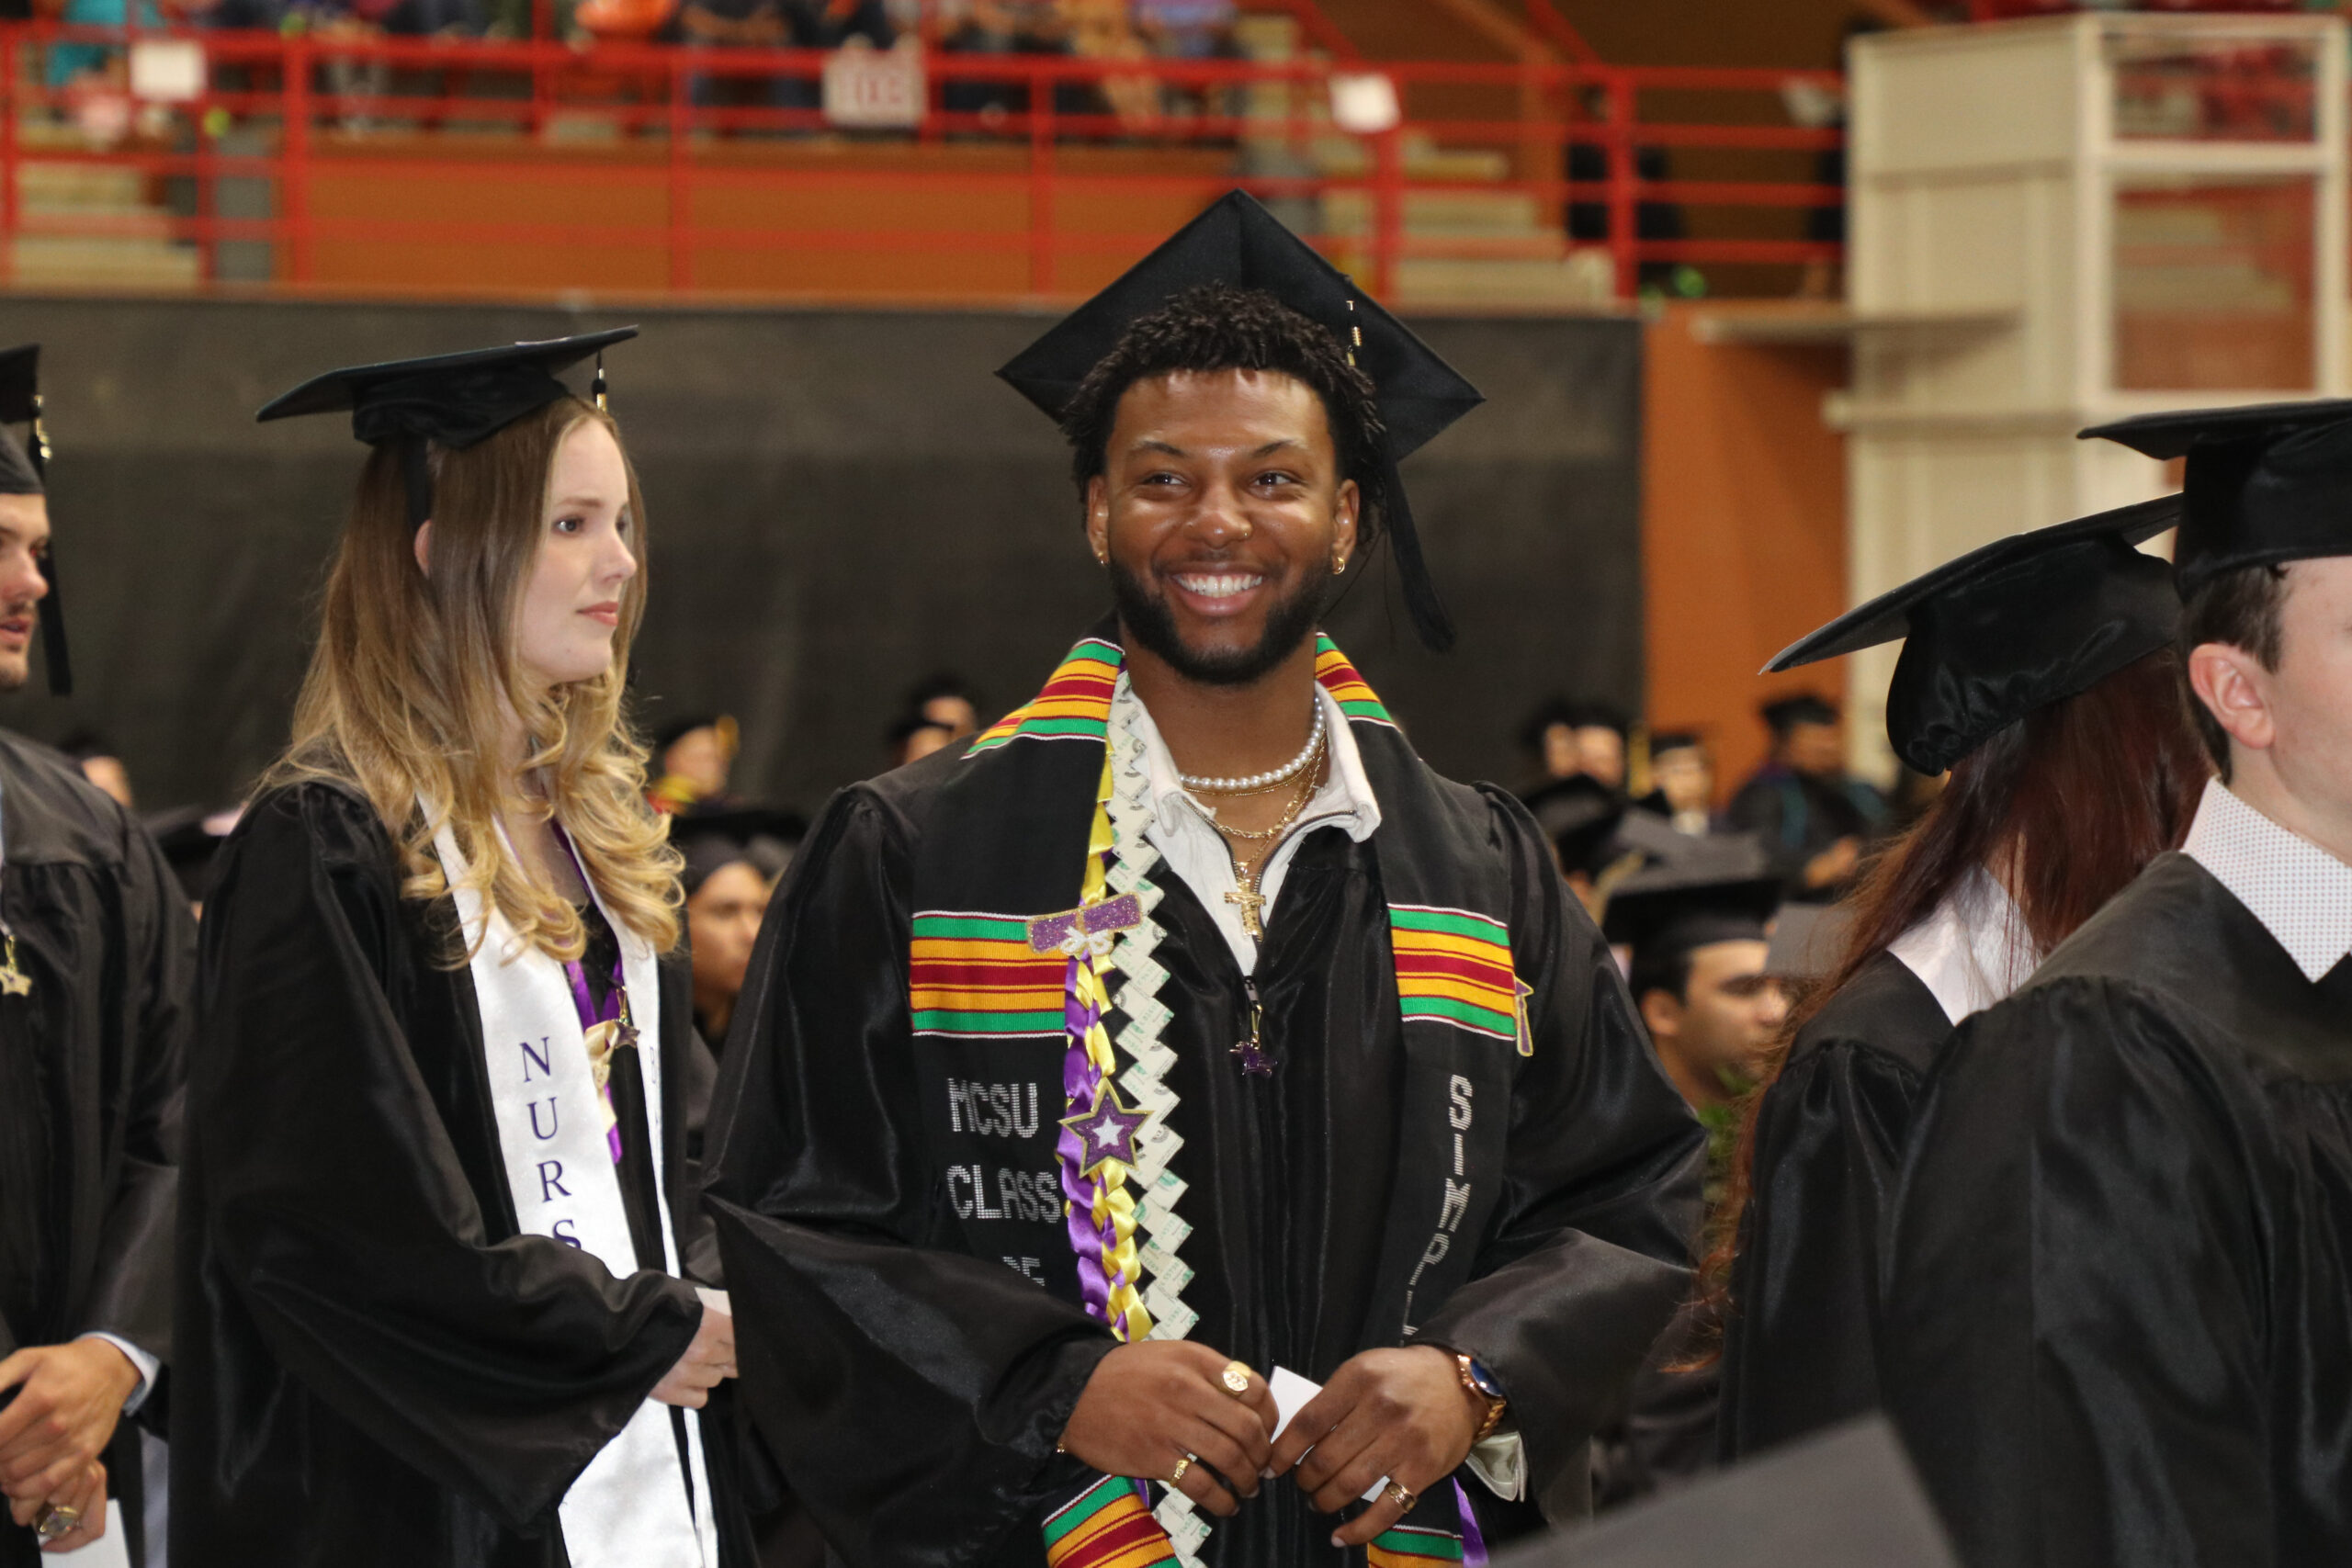 Man in graduation attire smiling